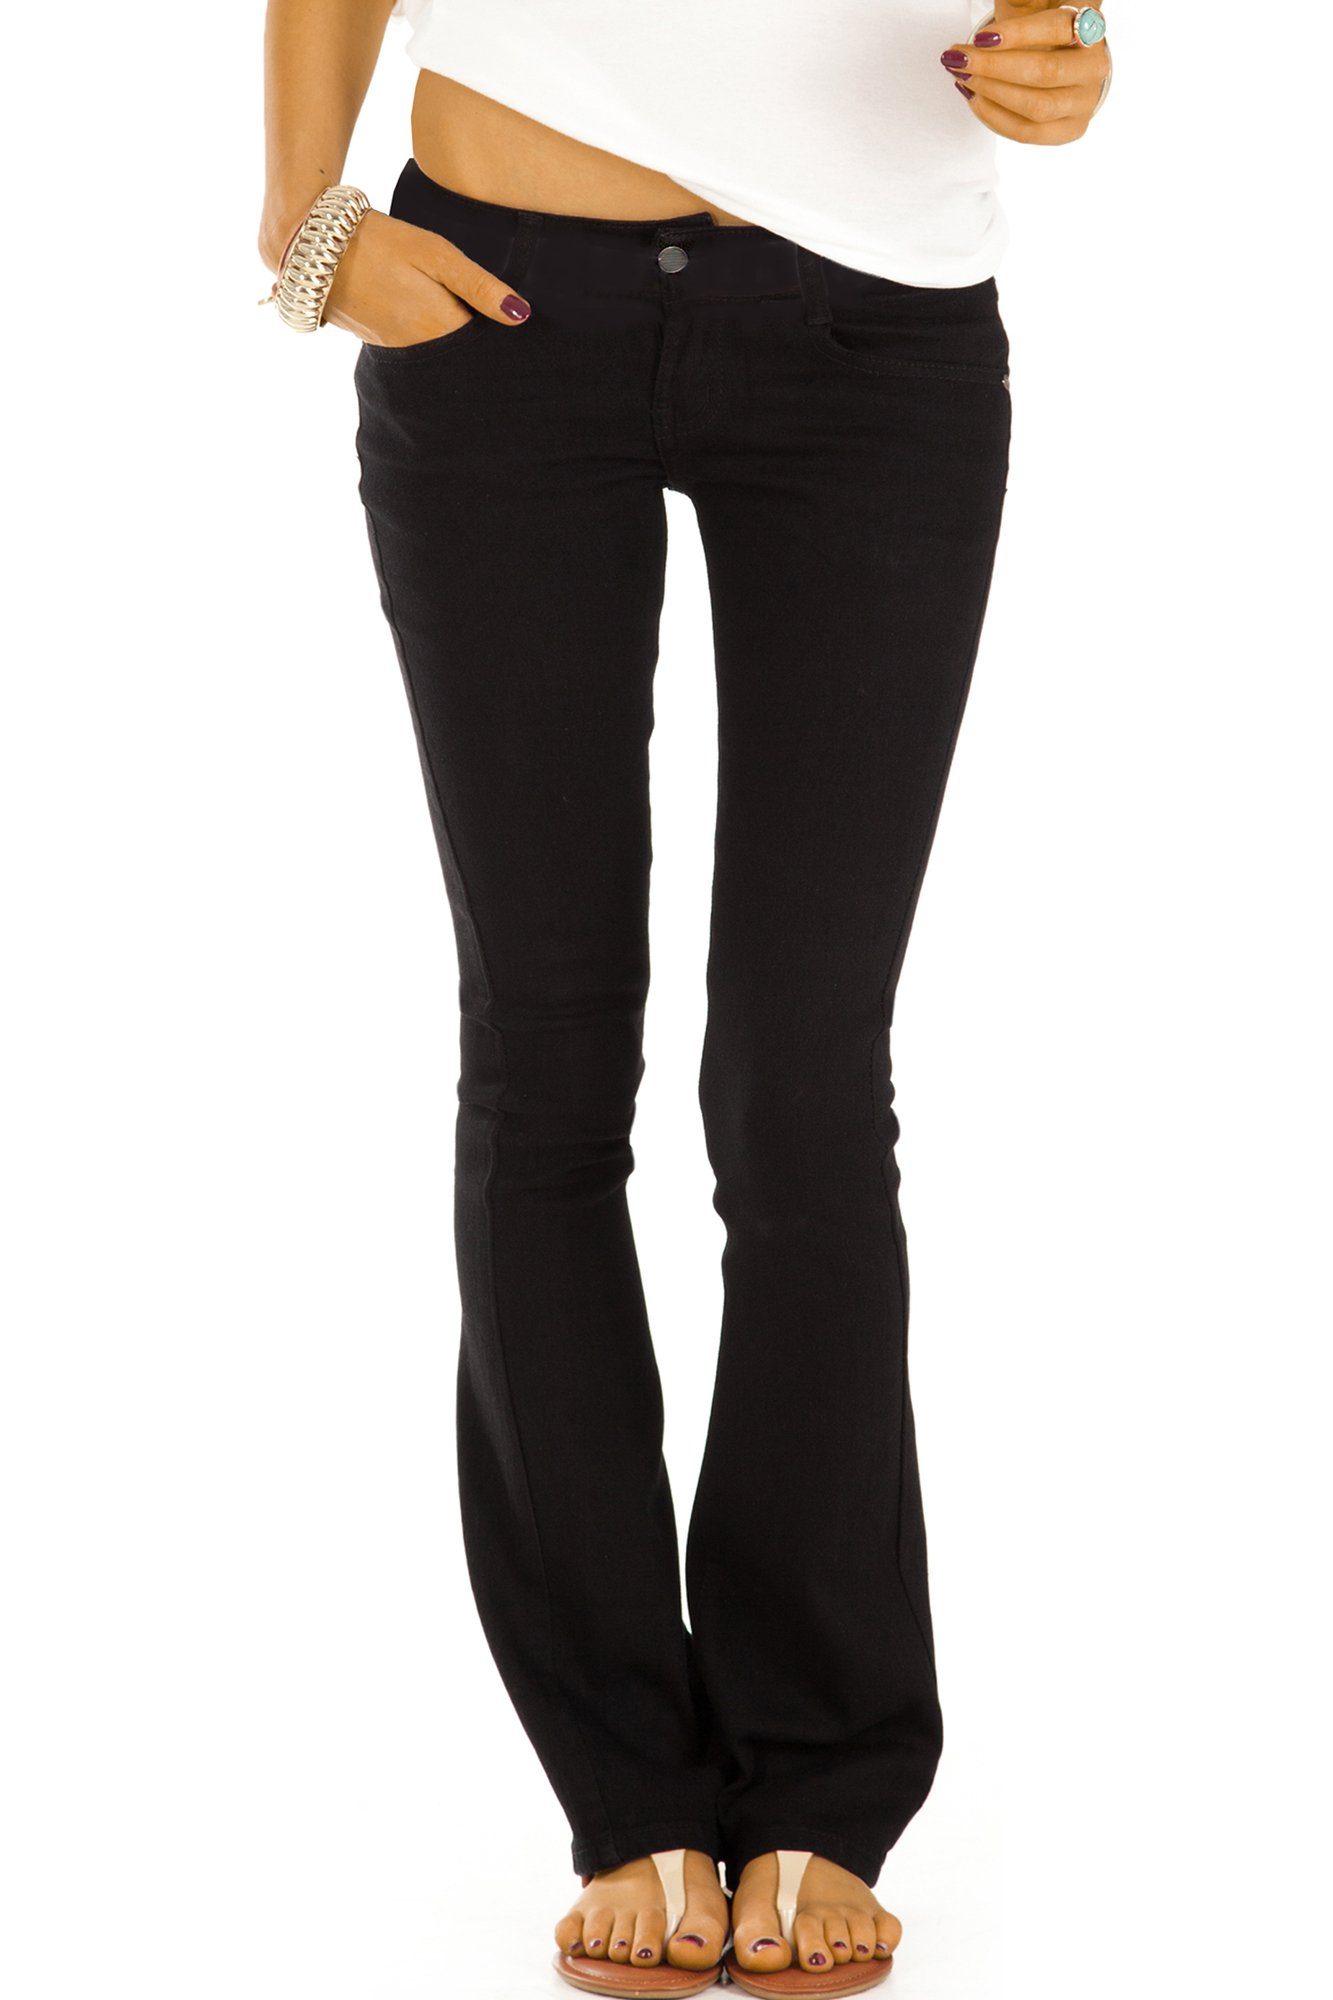 styled low schwarze, ausgestellte Bootcut-Jeans Hüfthose waist be j74kw Damenjeans